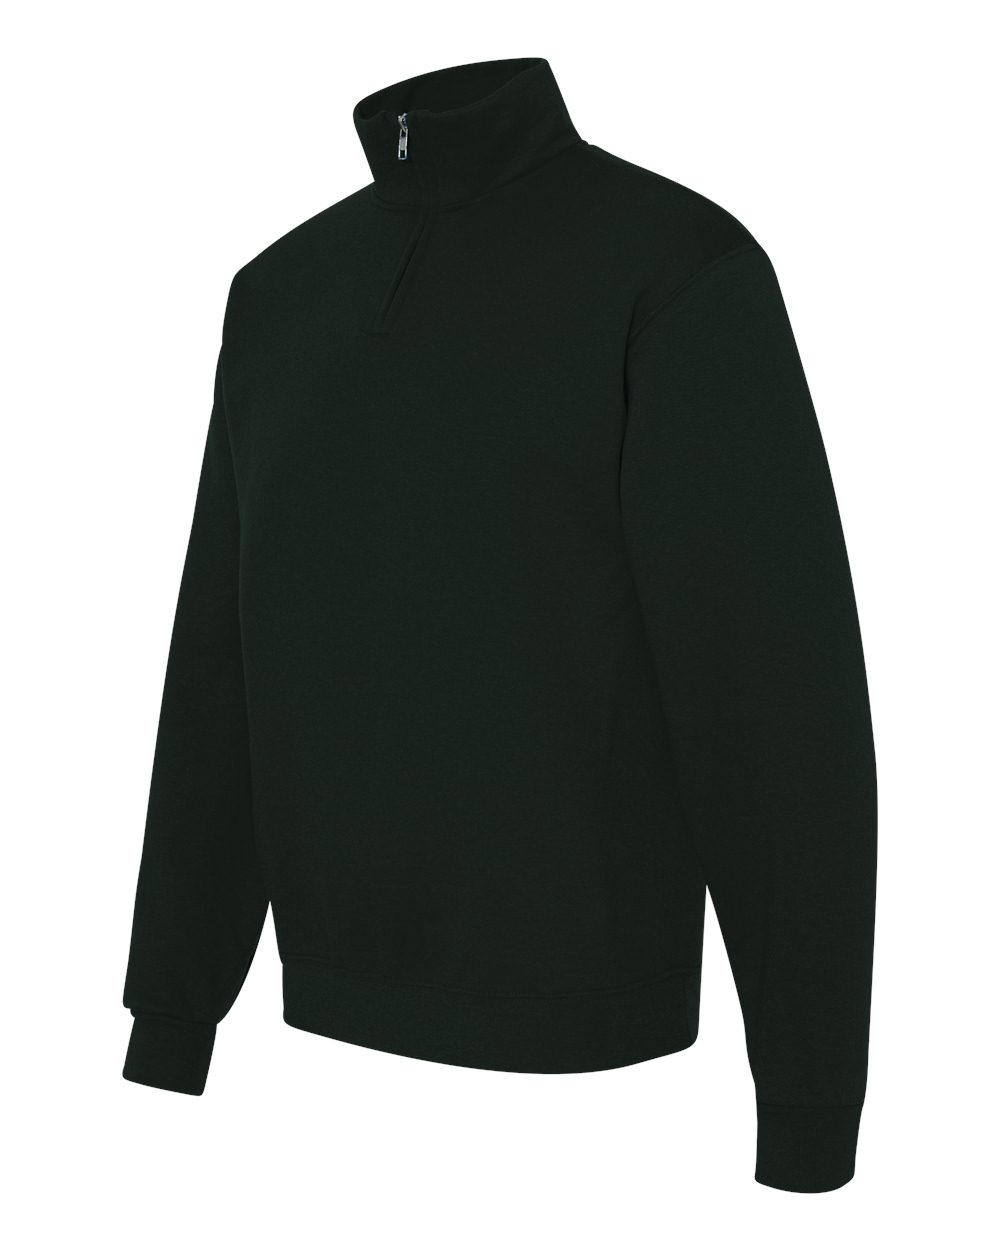 JERZEES 995MR - Nublend Cadet Collar Sweatshirt